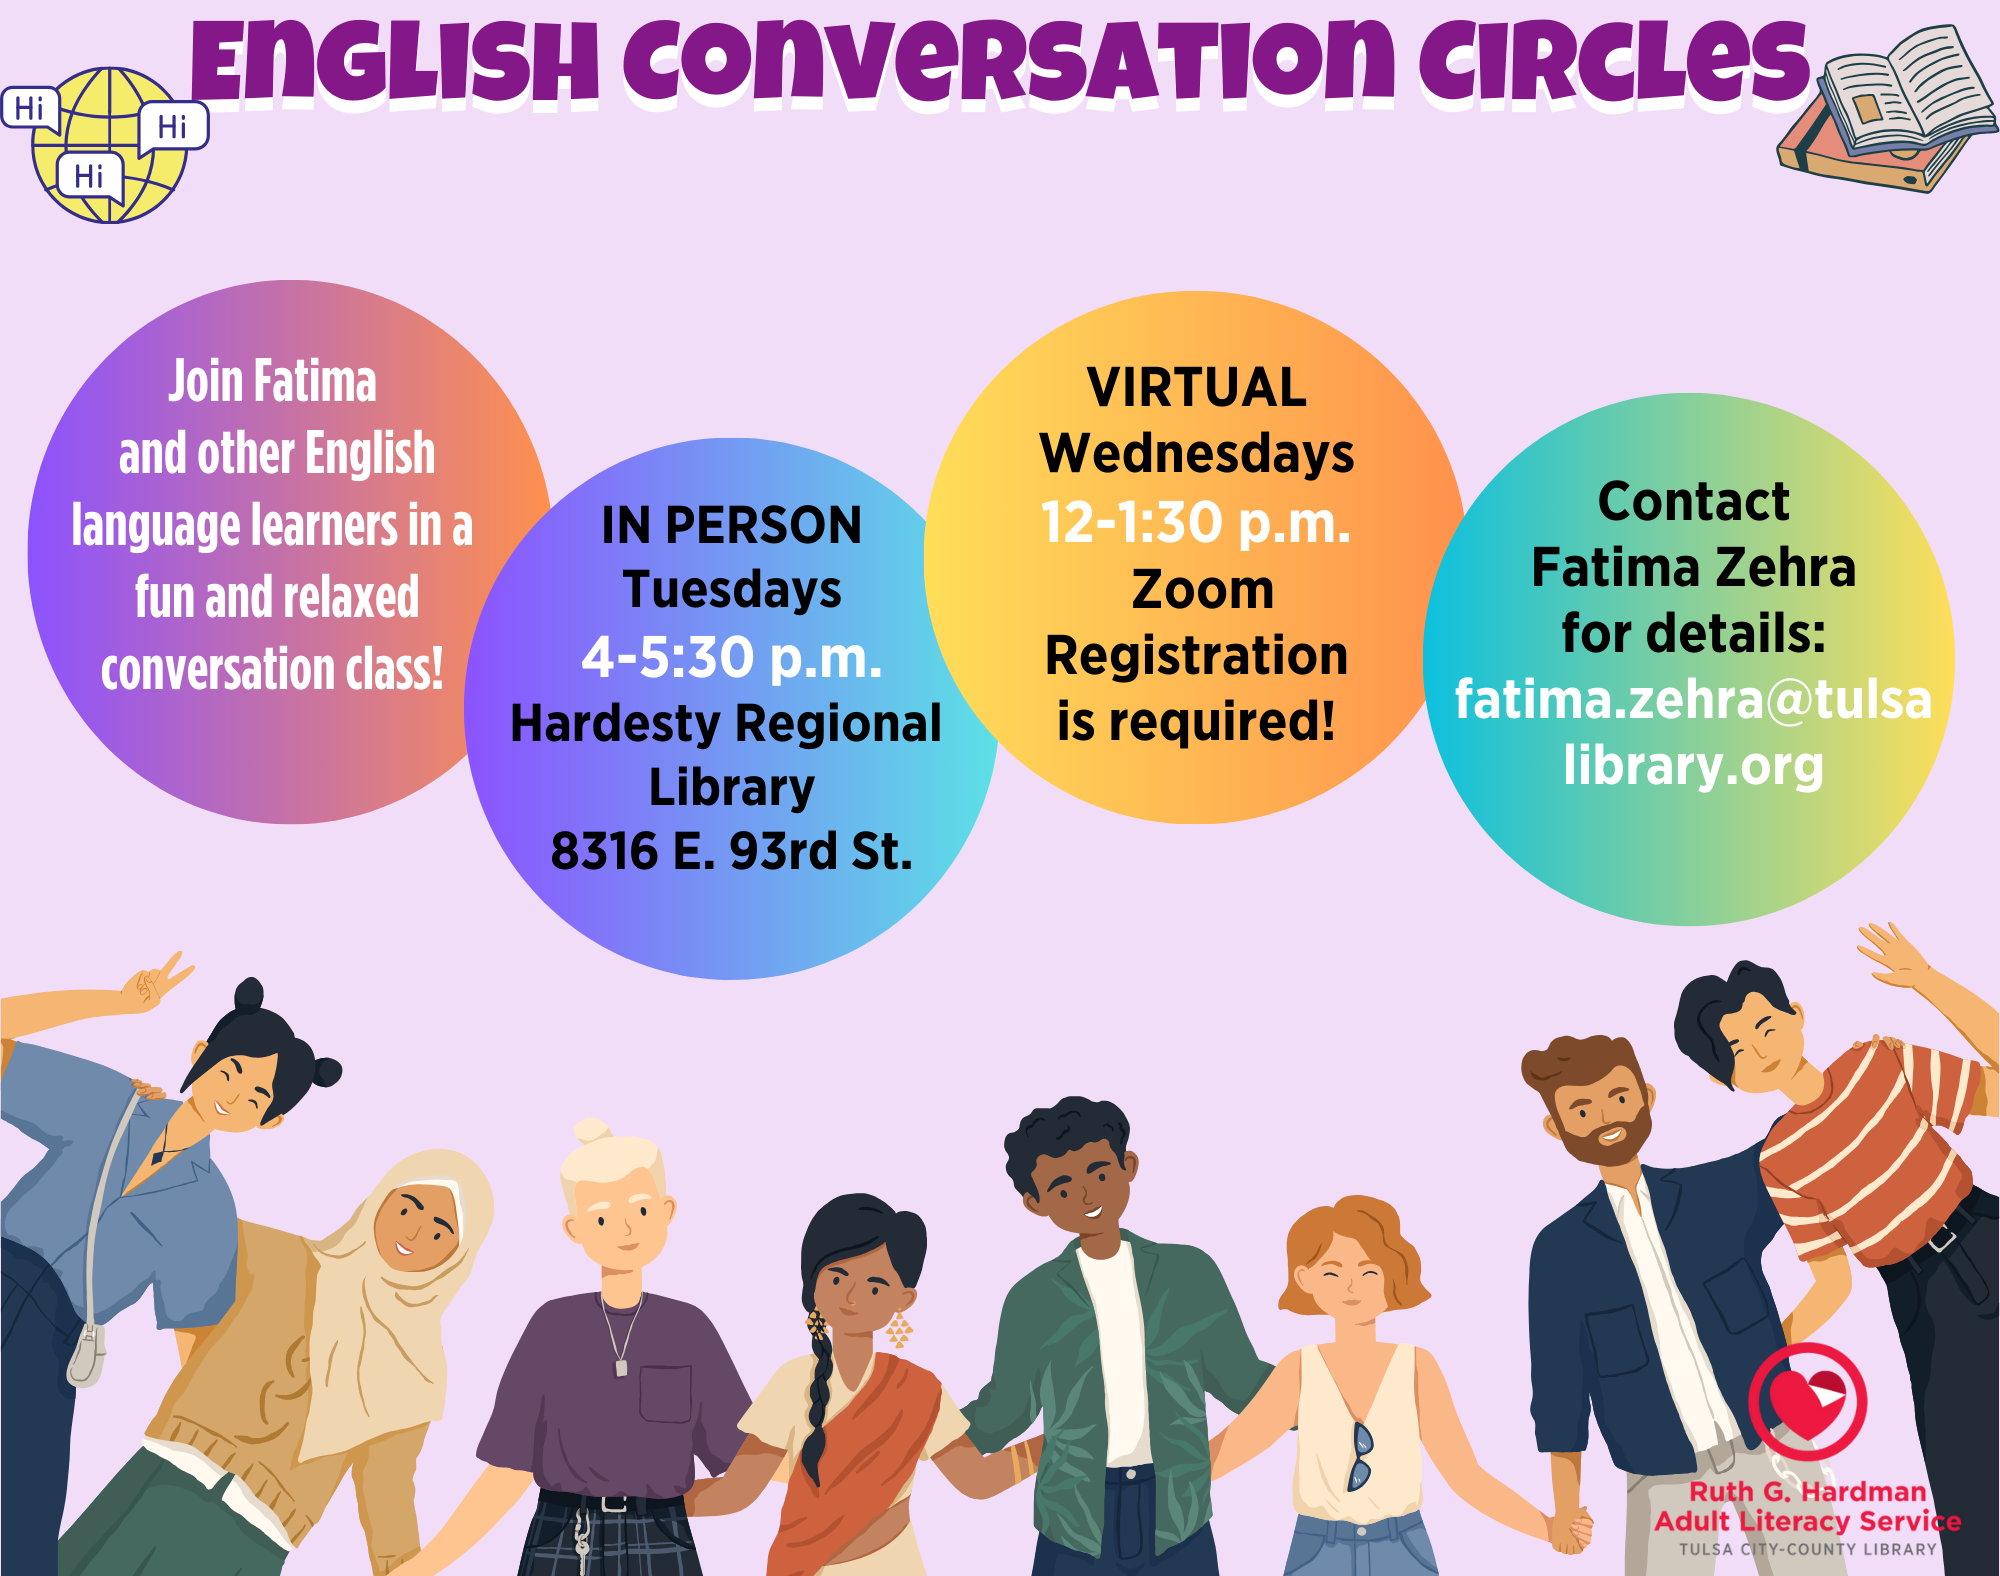 CONVERSATION CIRCLES